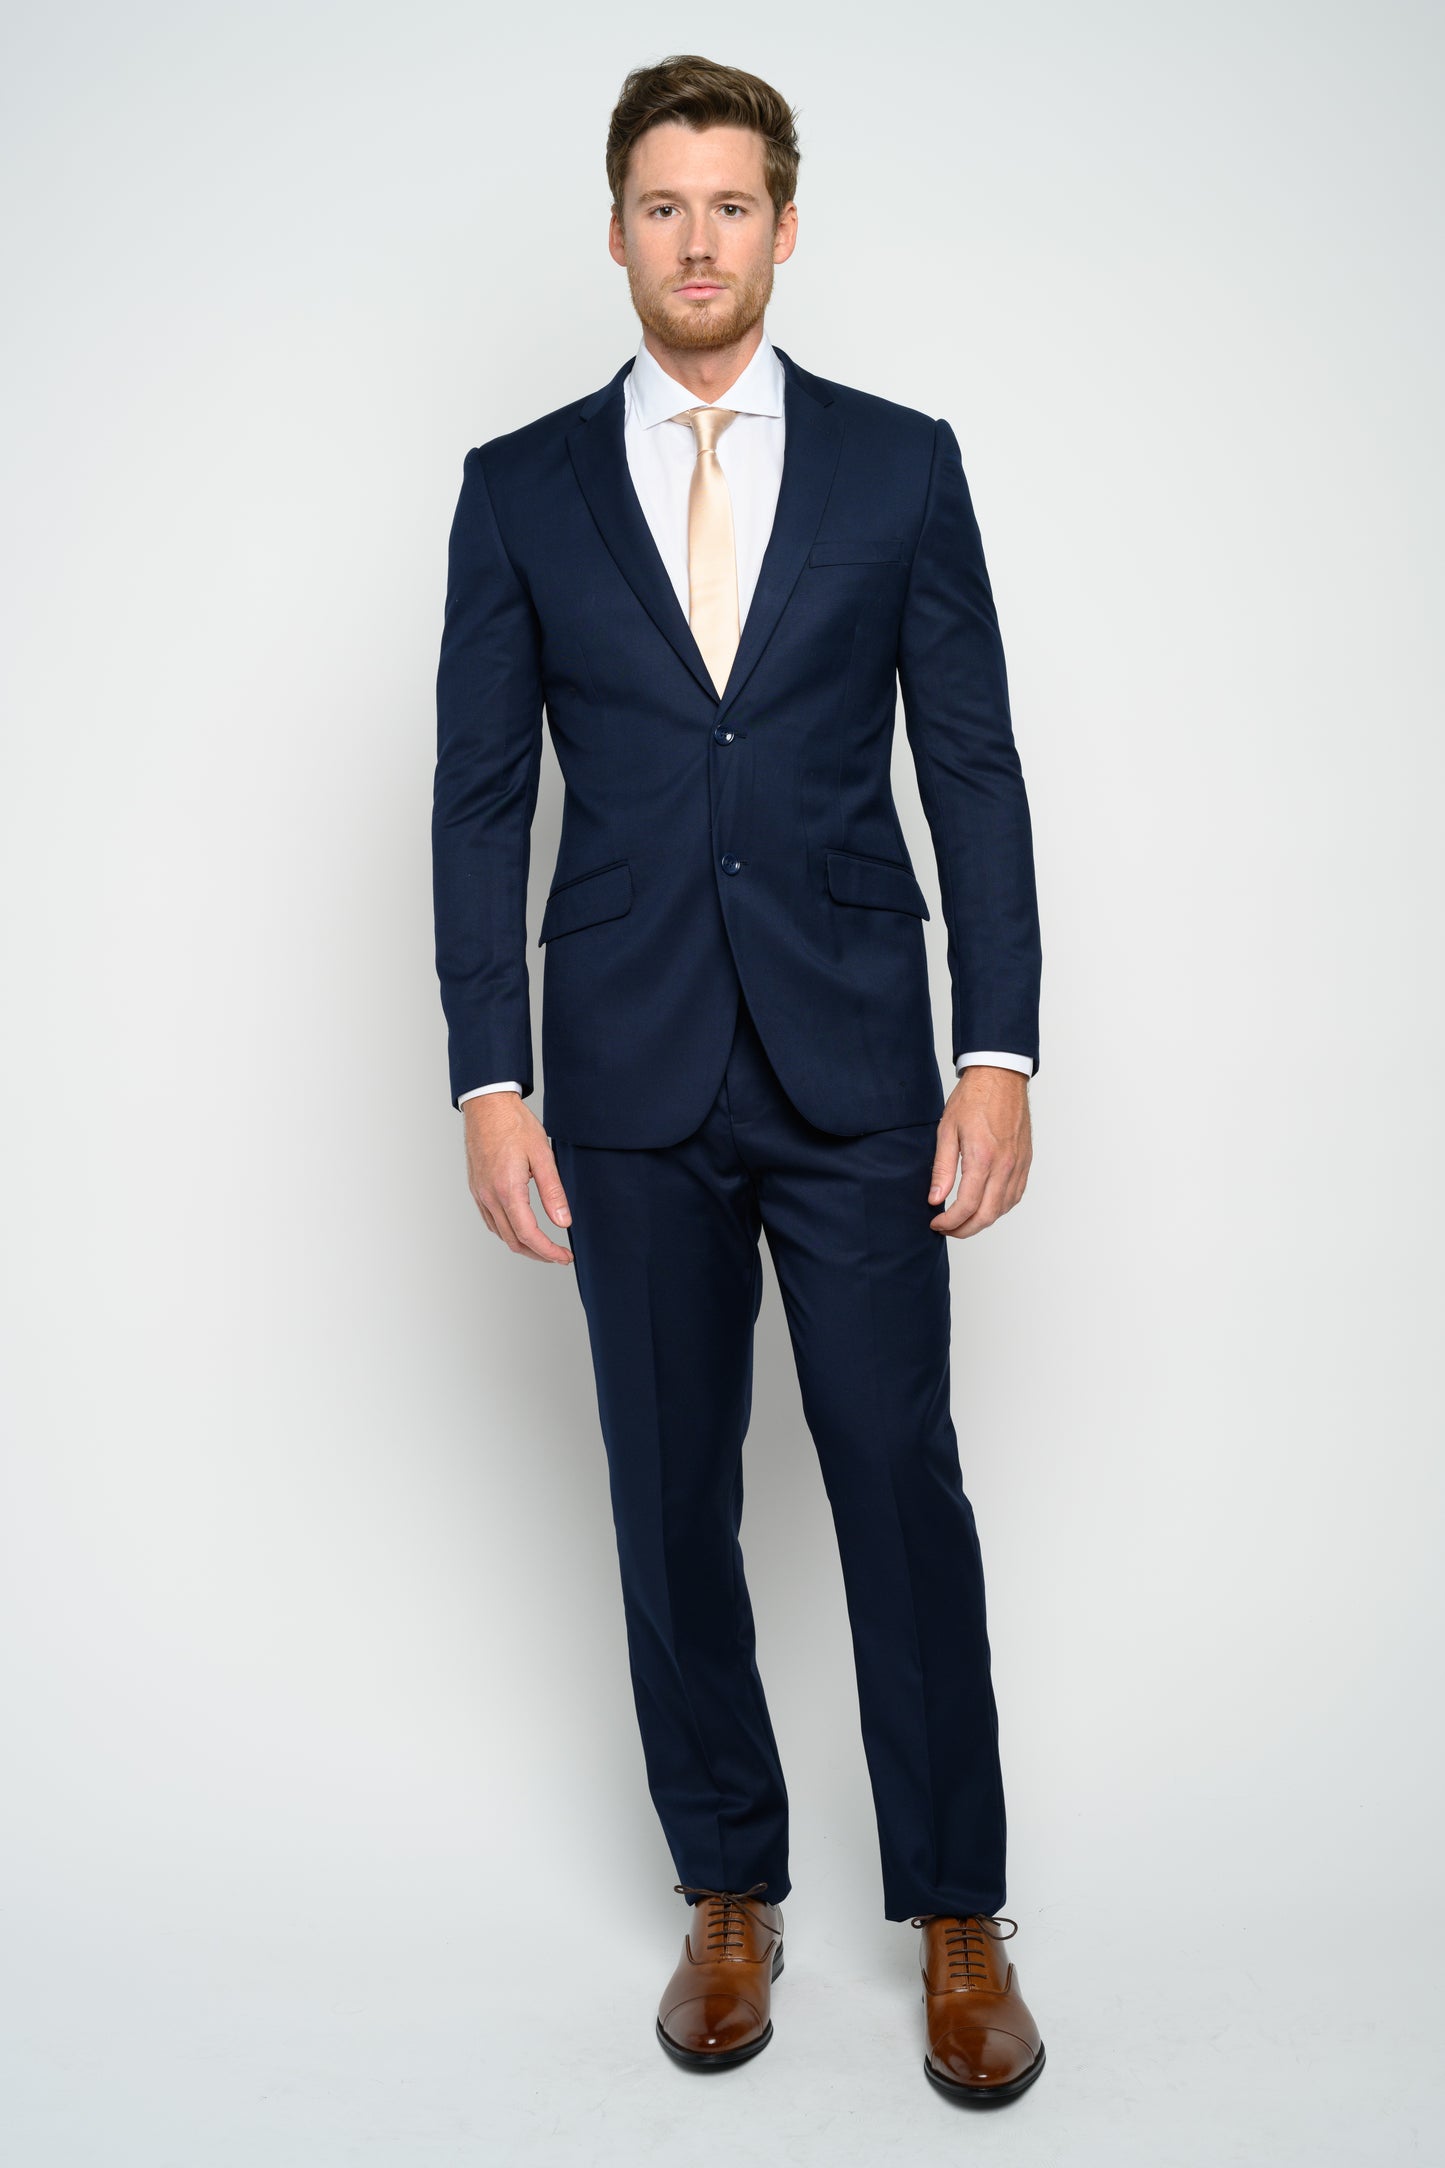 Men's Navy Slim Fit Suit 